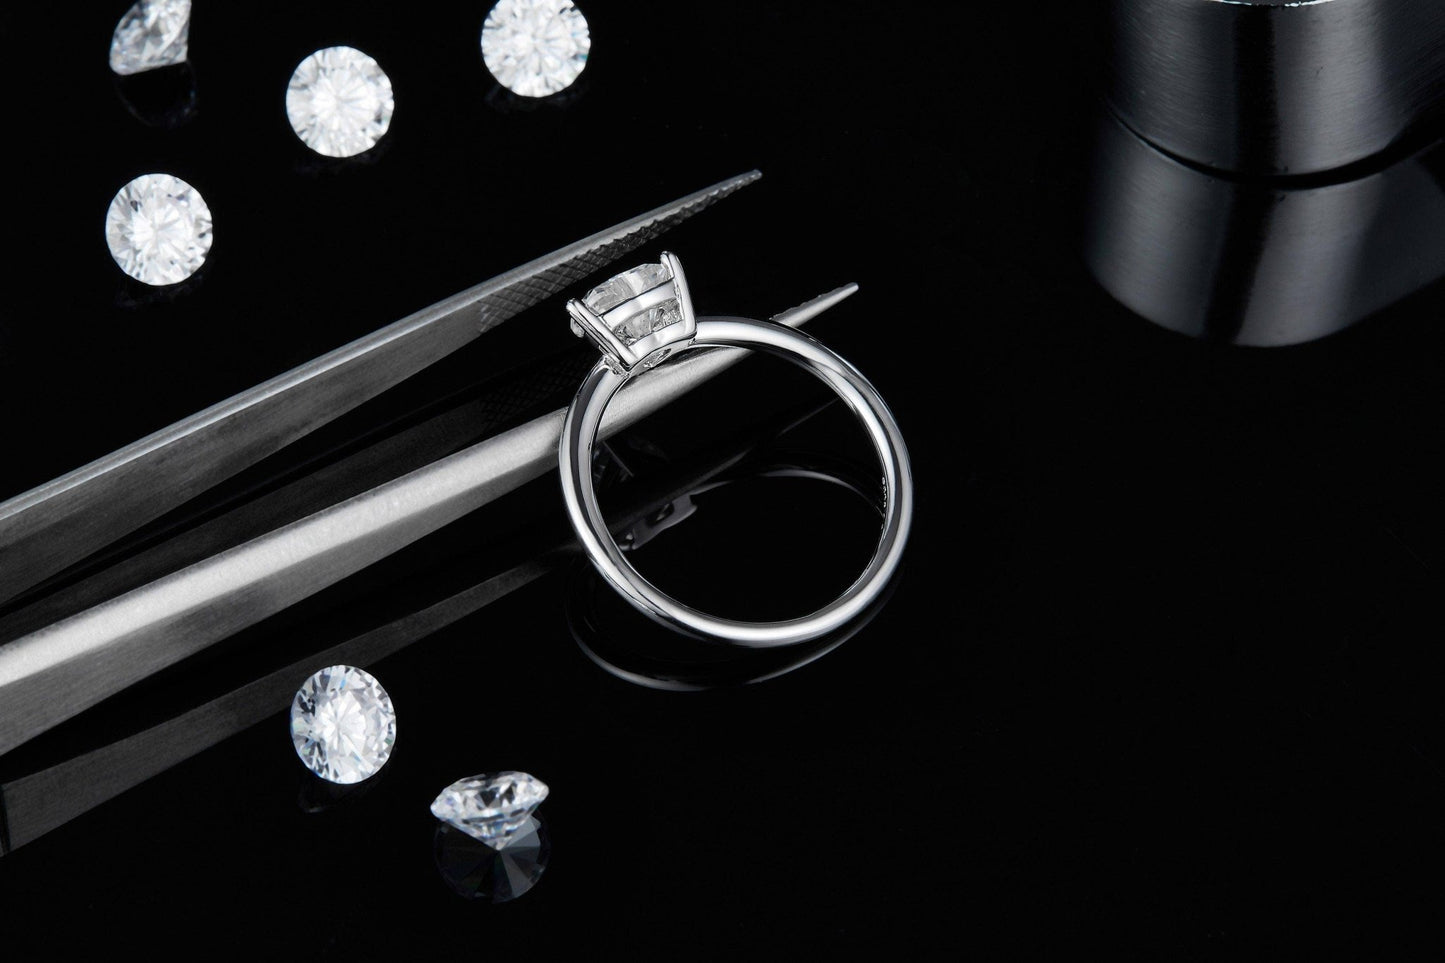 Heart 1.0Ct 6.5mm Diamond Ring-Black Diamonds New York